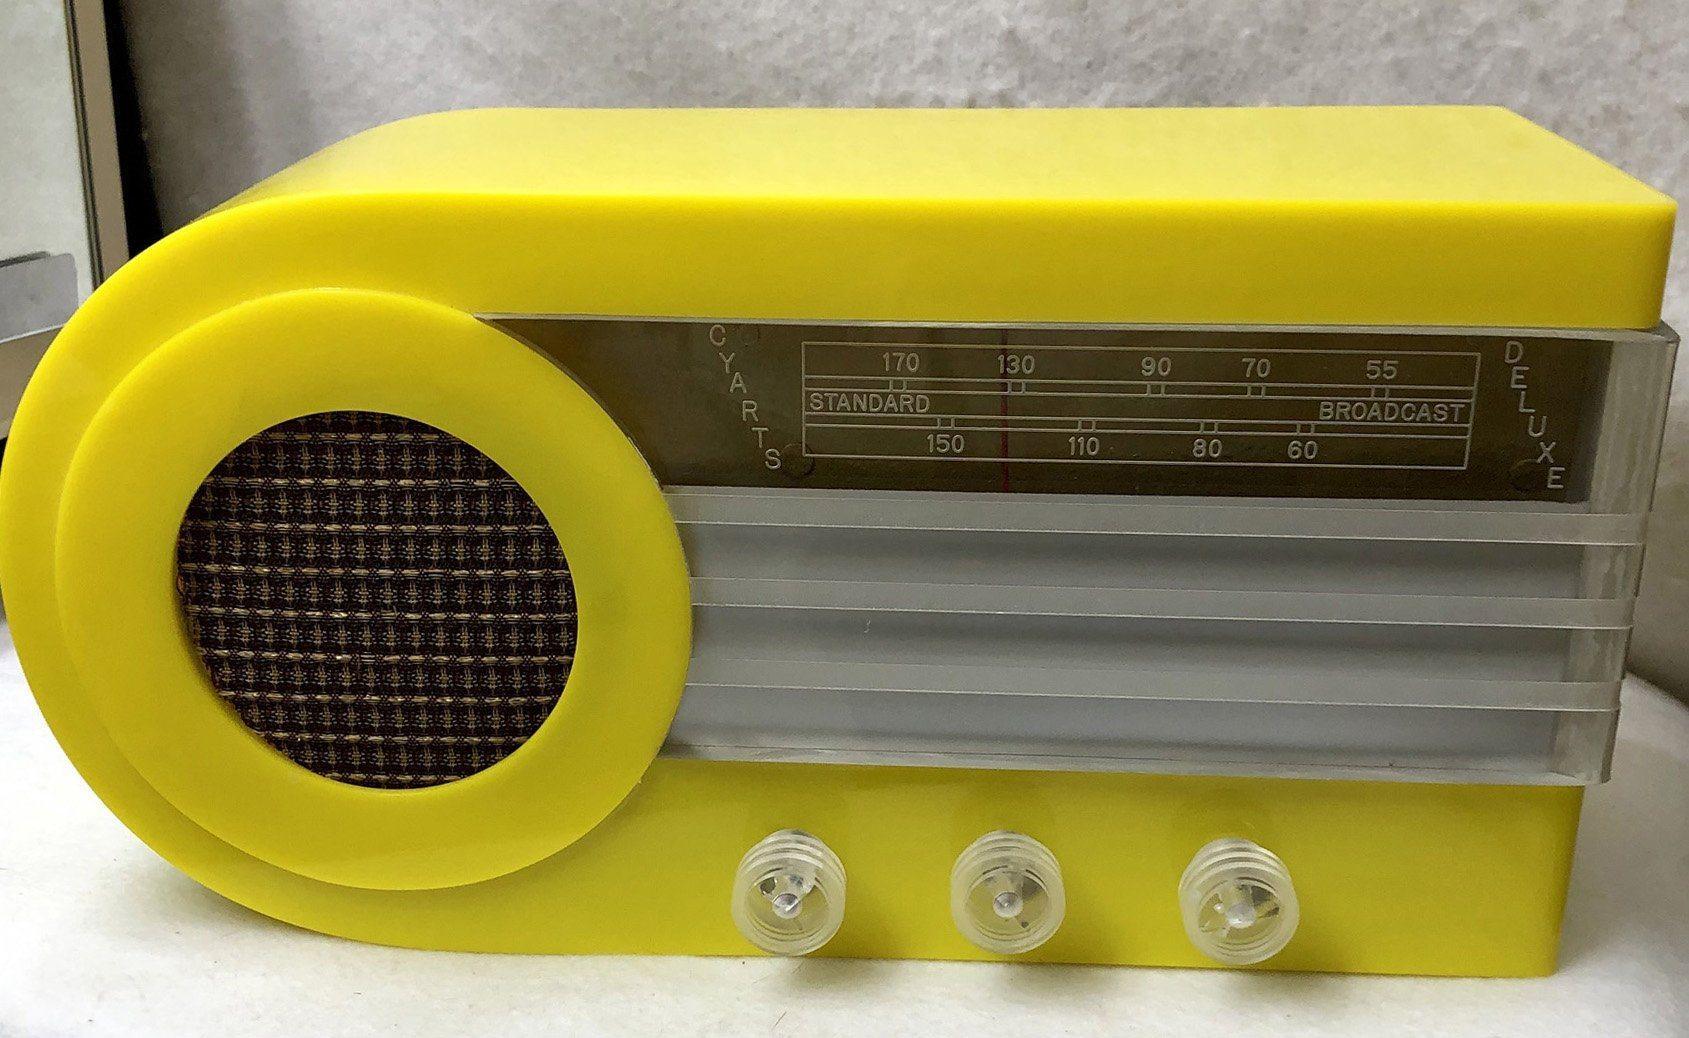 Cyarts B Plastic Radio- Yellow